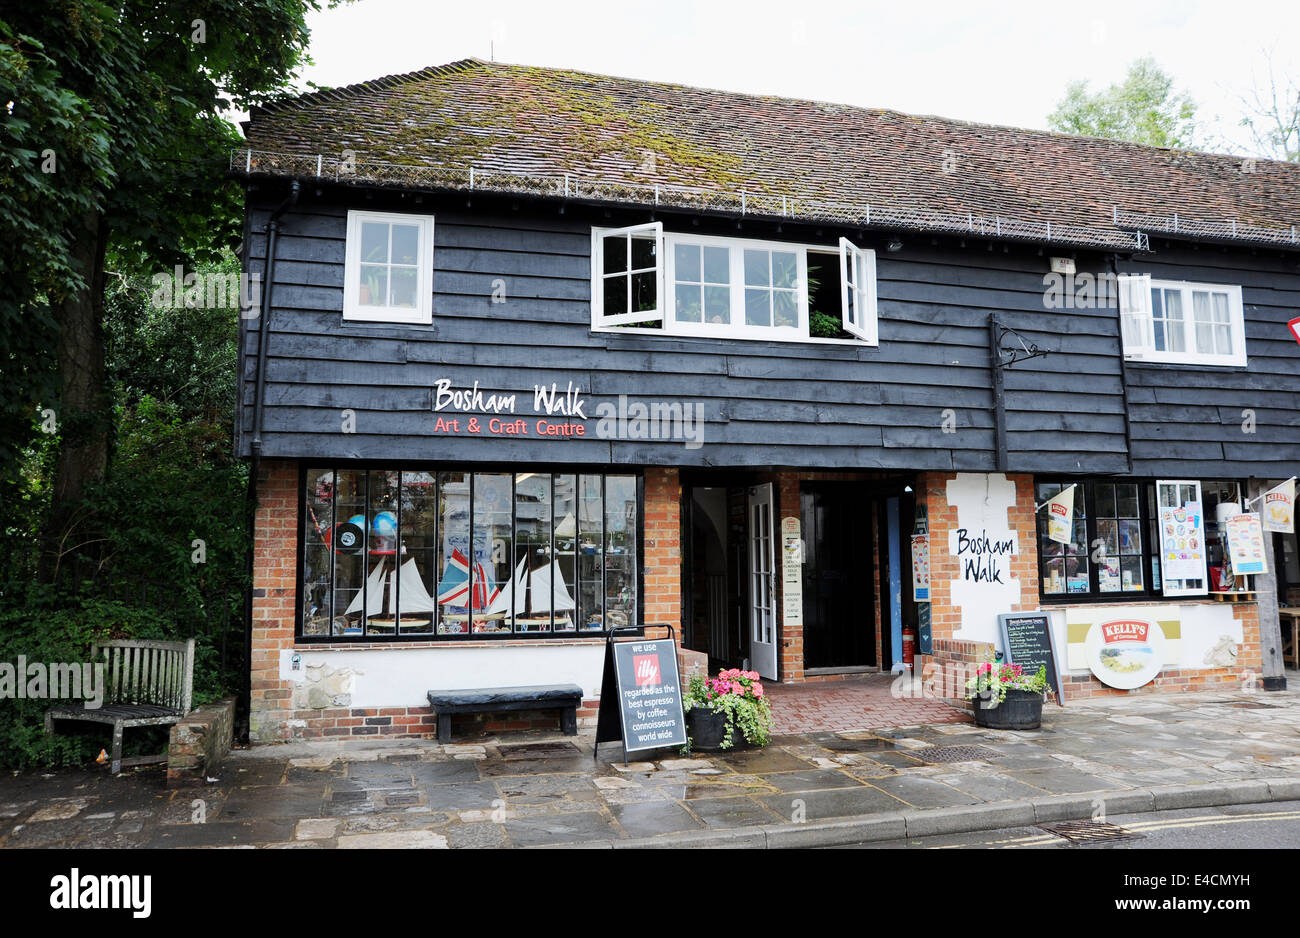 Bosham walk Craft Shops and stalls West Sussex UK Stock Photo